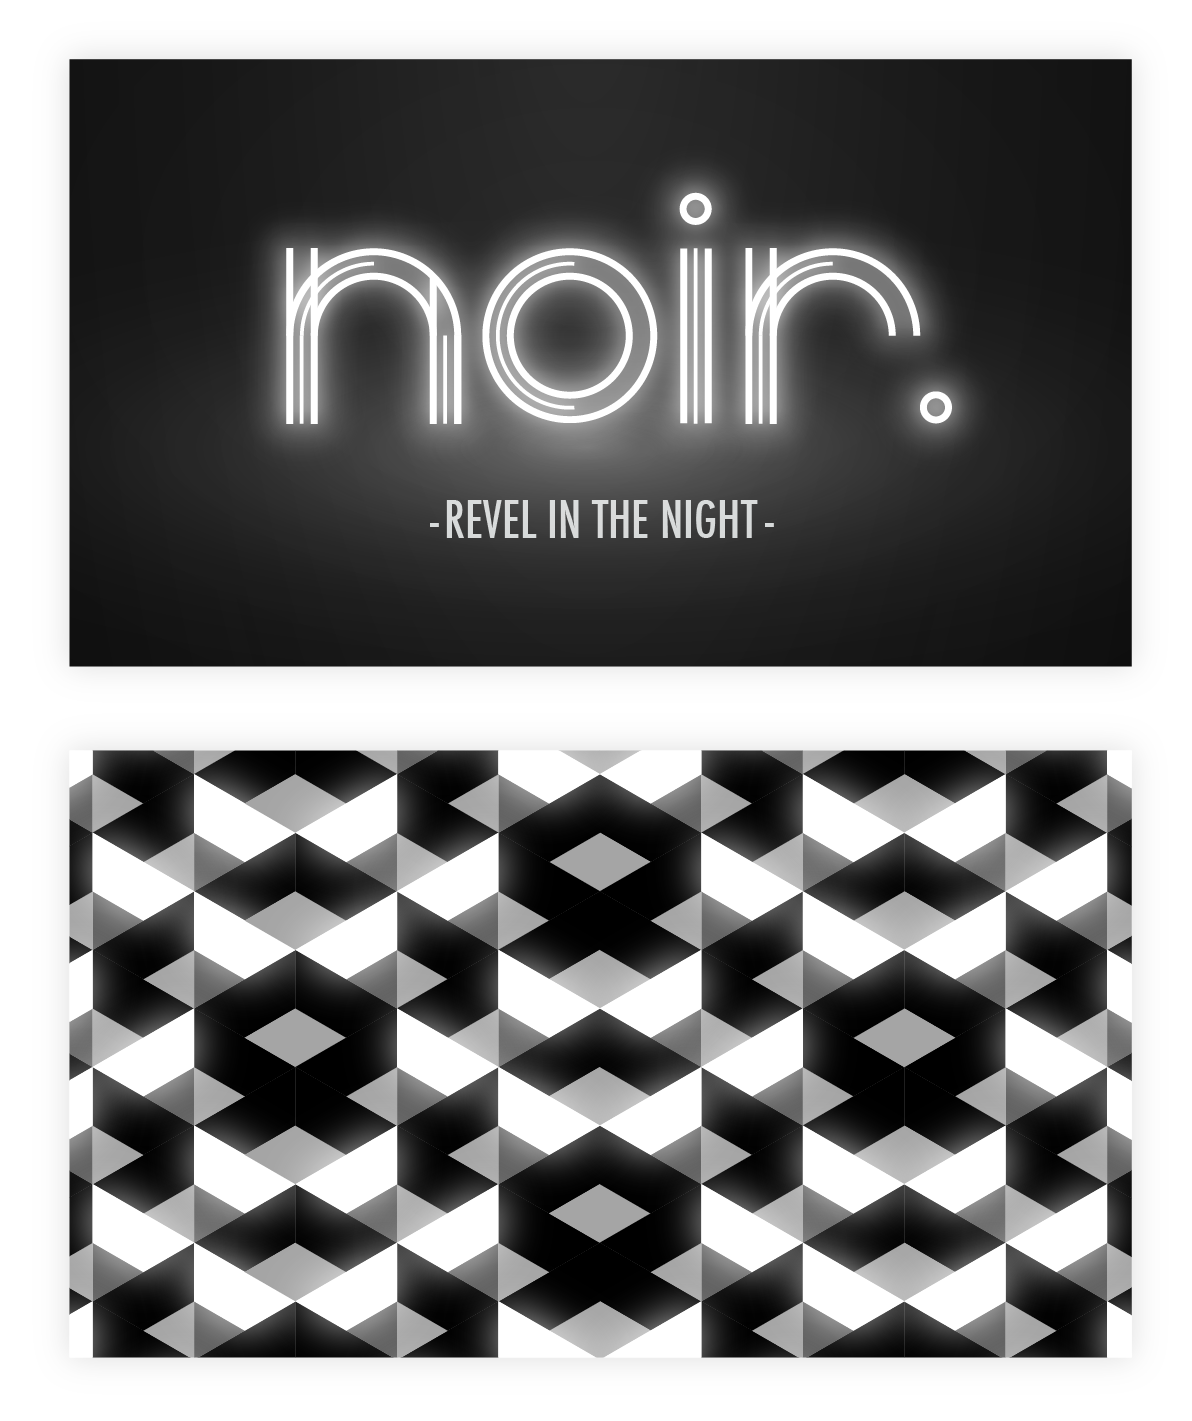 noir pattern brand logo business card letterhead design club